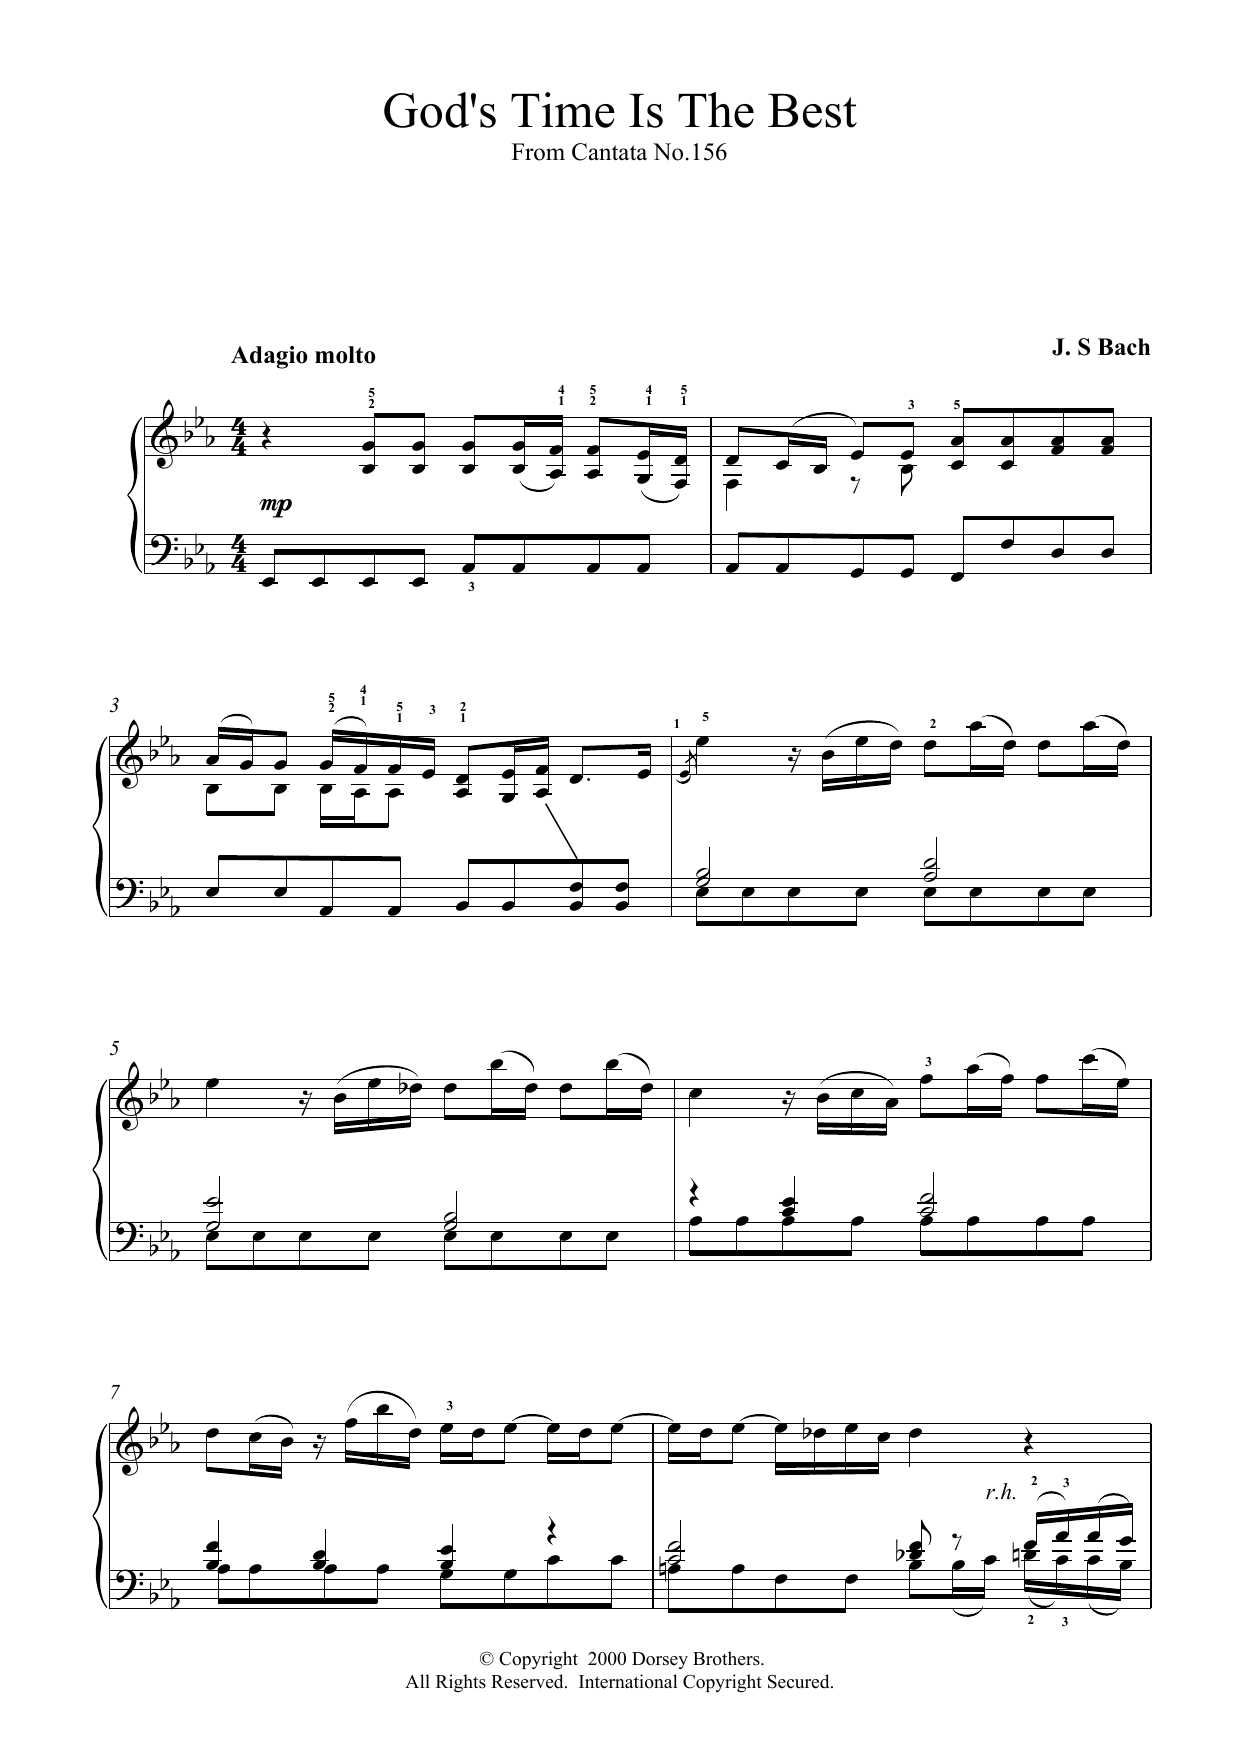 Johann Sebastian Bach God's Time Is The Best sheet music notes printable PDF score